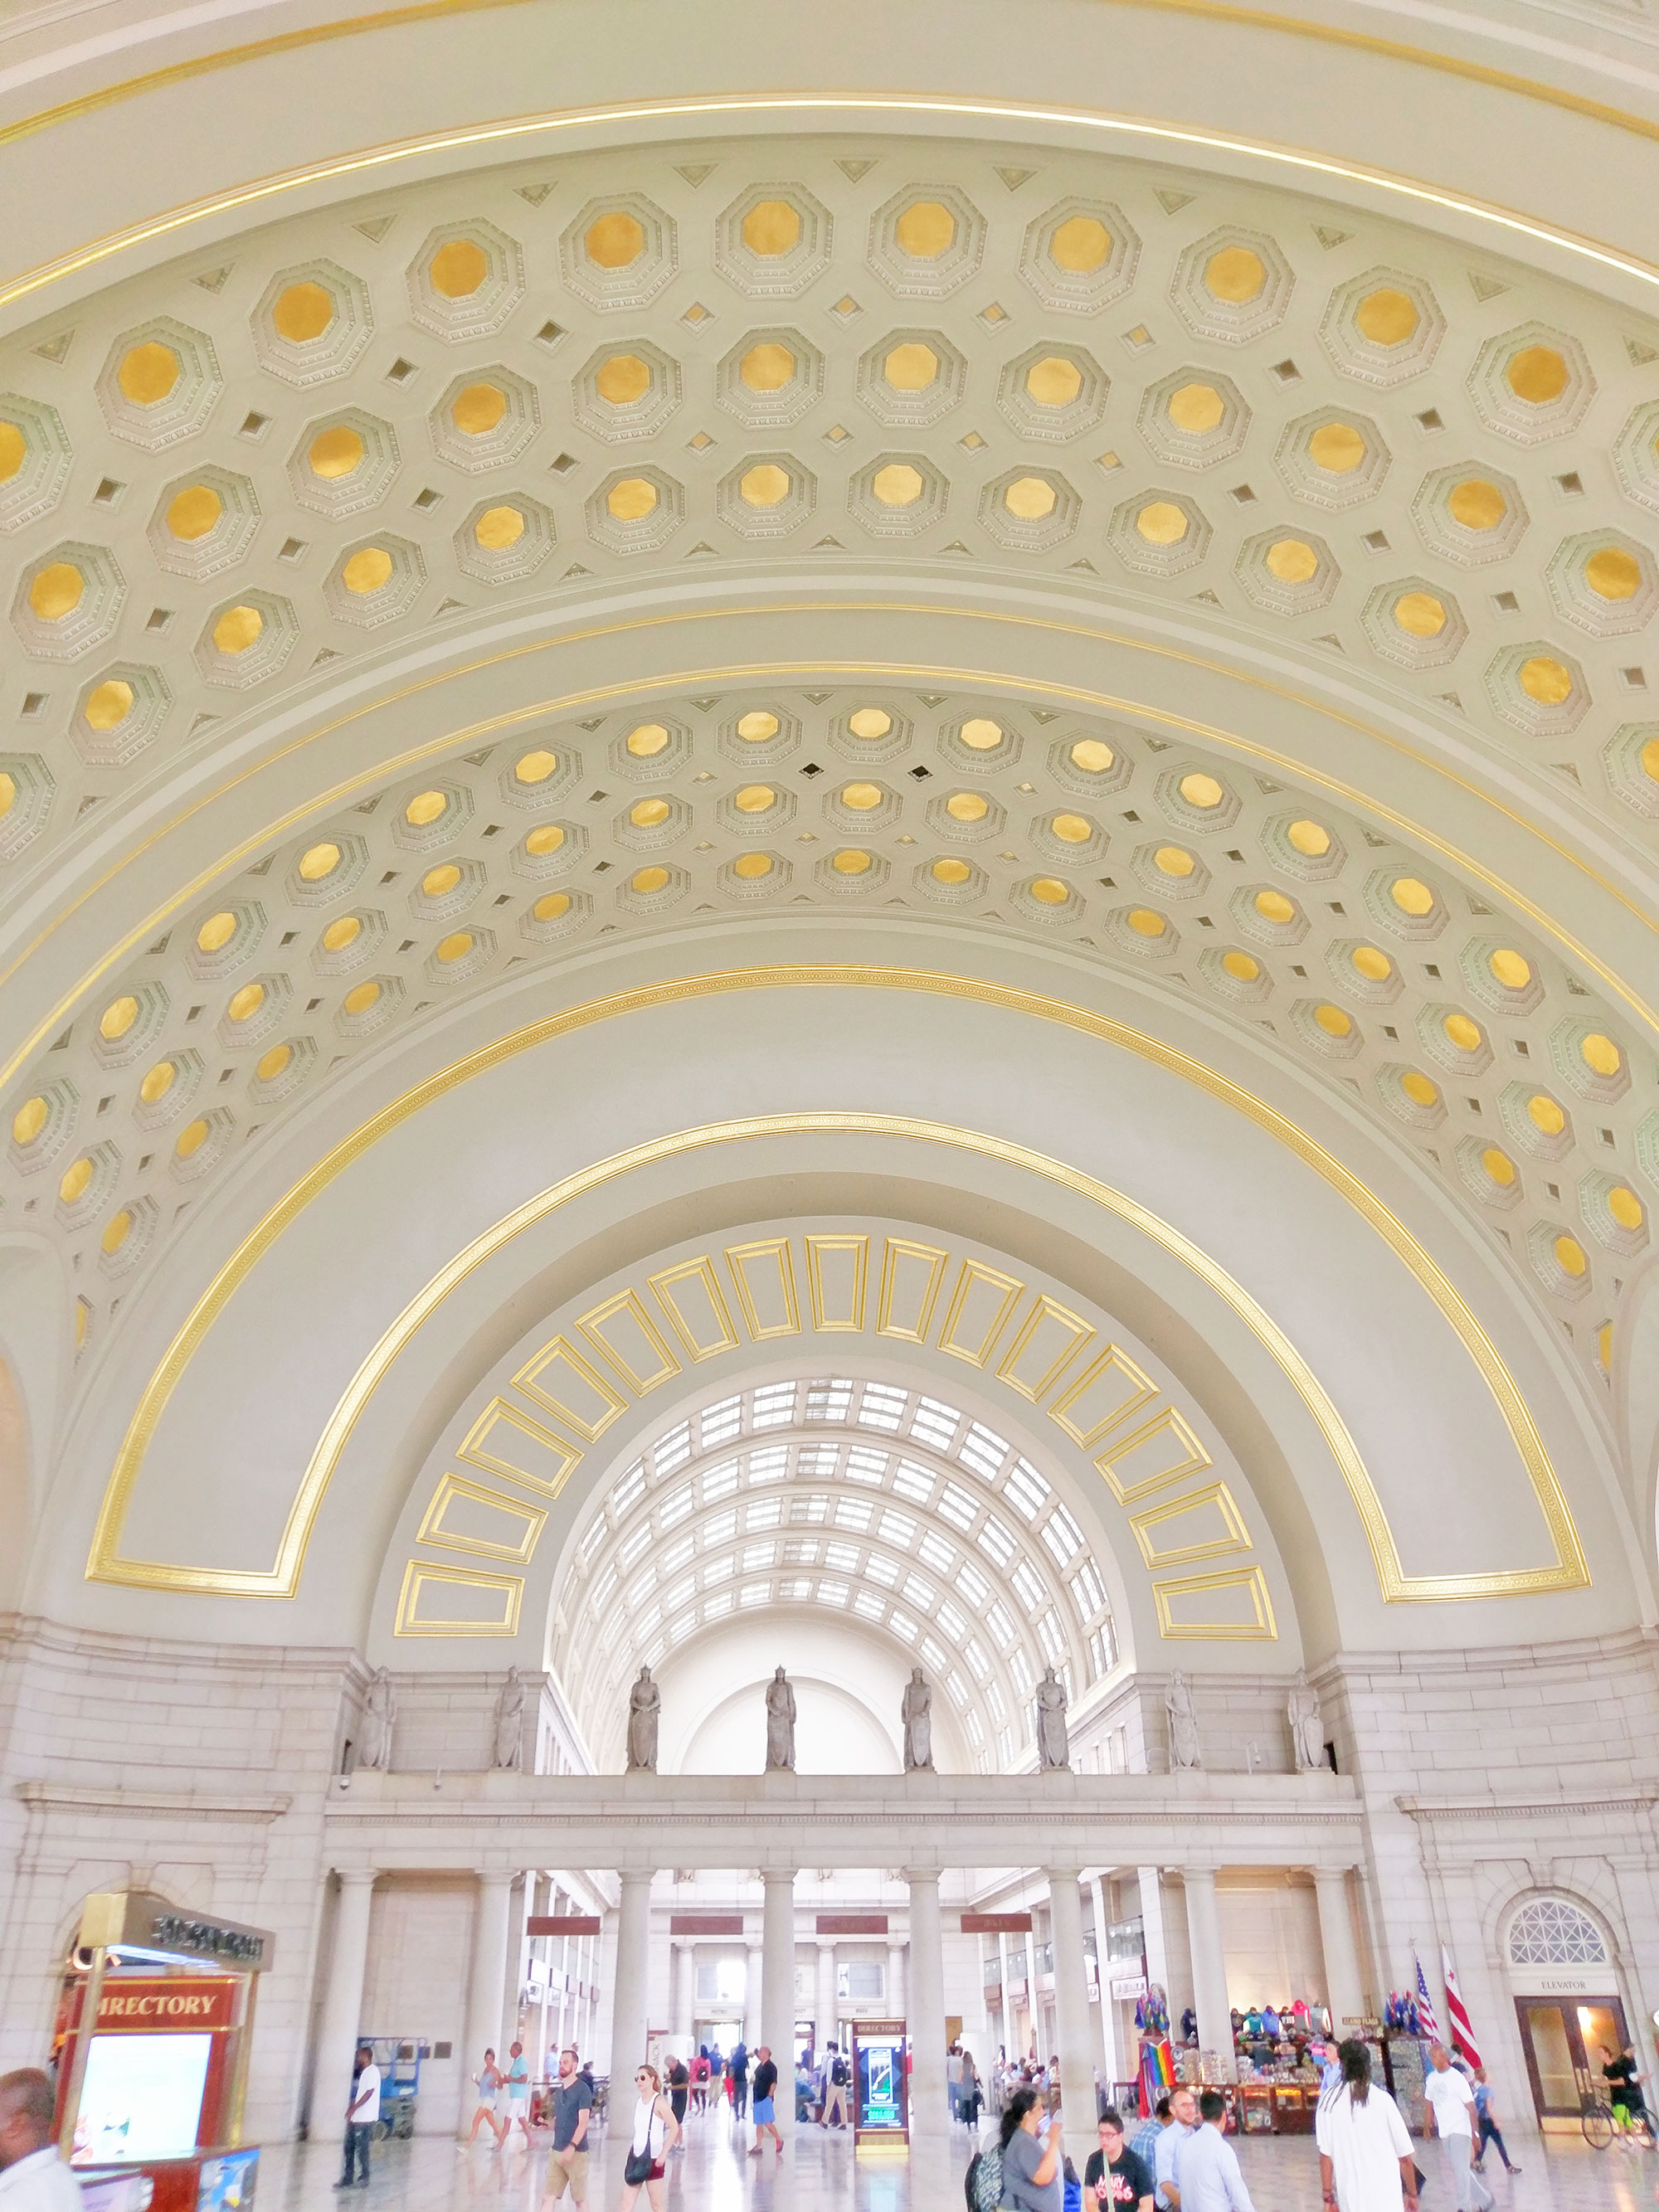 Union Station in Washington D.C.